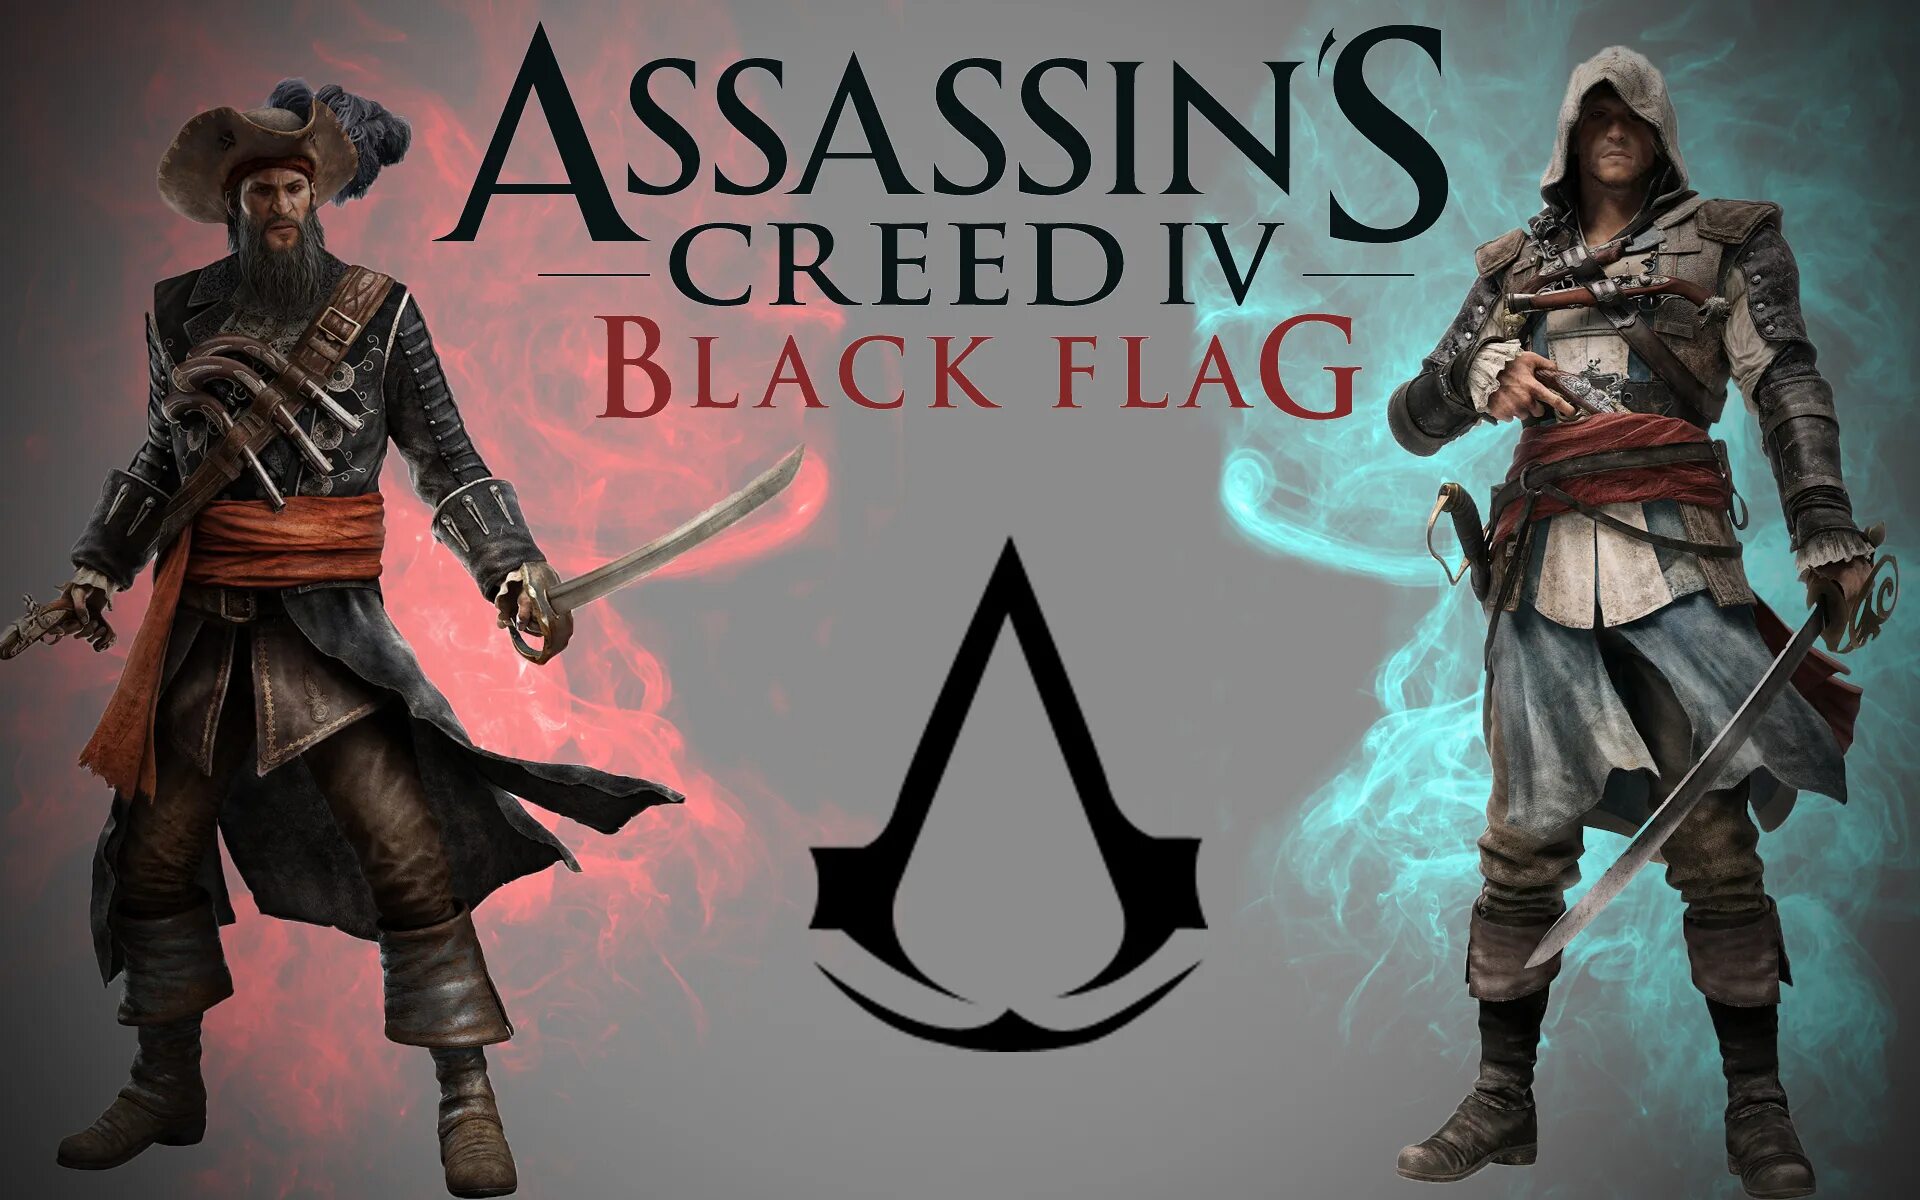 Асасин крид черный флаг на русском. Assassin's Creed IV Black Flag. Assassins Creed Блэк флаг. Черный флаг ассасин Крид обложка. Assassin’s Creed IV: Black Flag обложка.